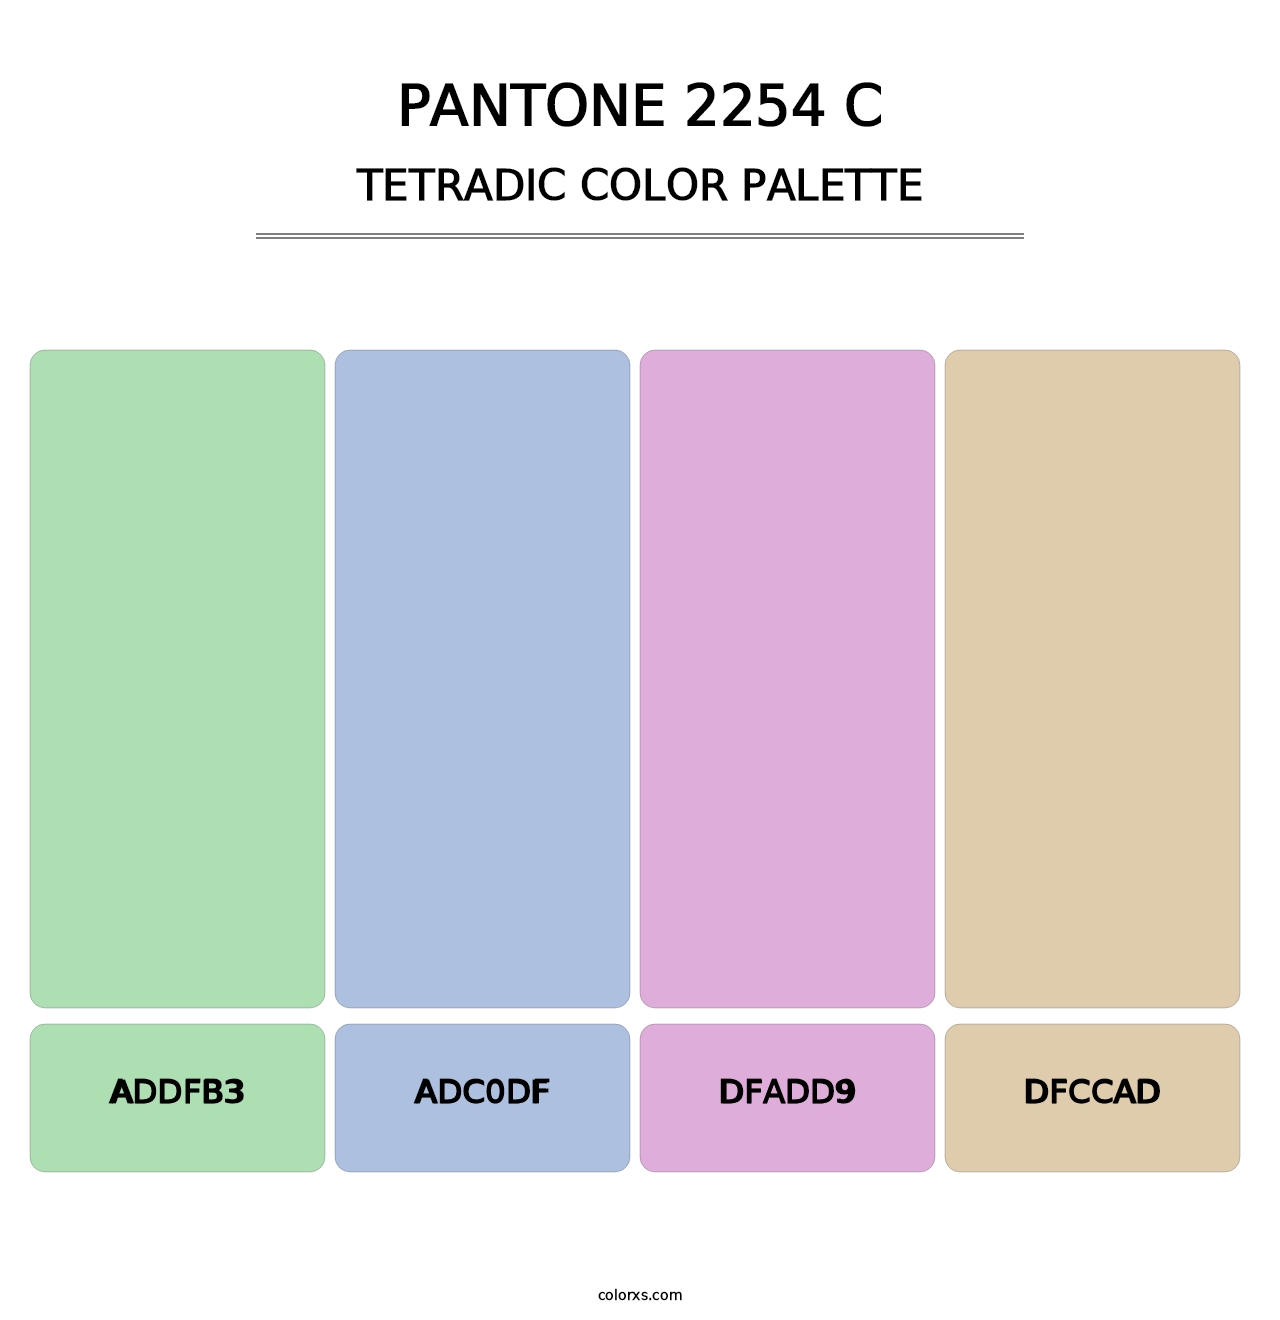 PANTONE 2254 C - Tetradic Color Palette